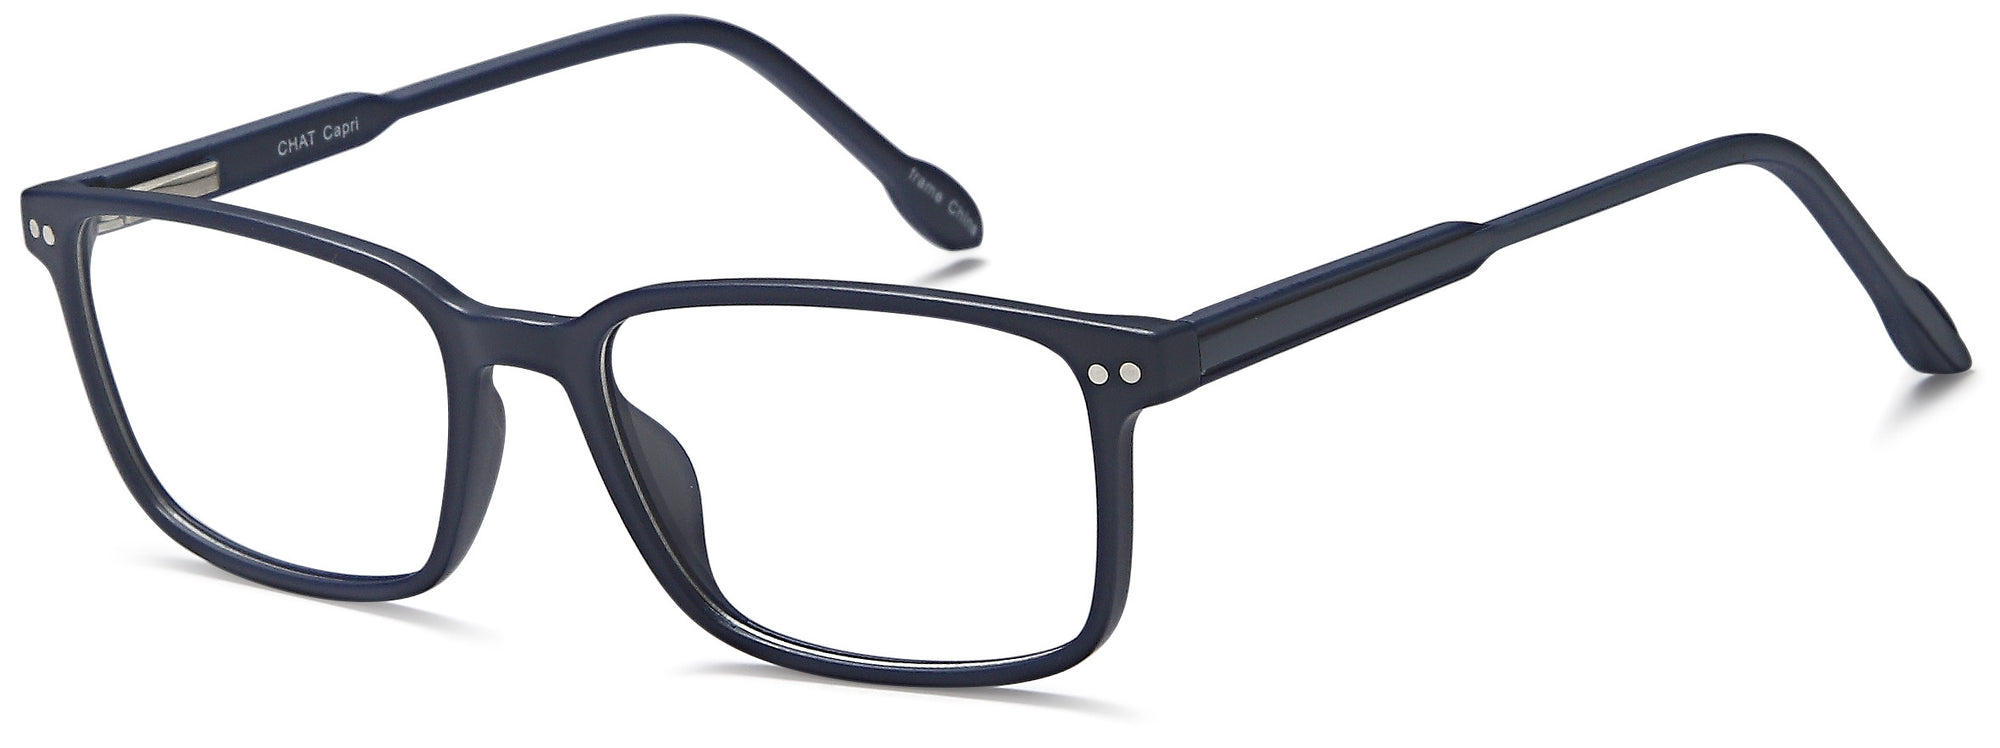 MILLENNIAL Eyeglasses CHAT - Go-Readers.com